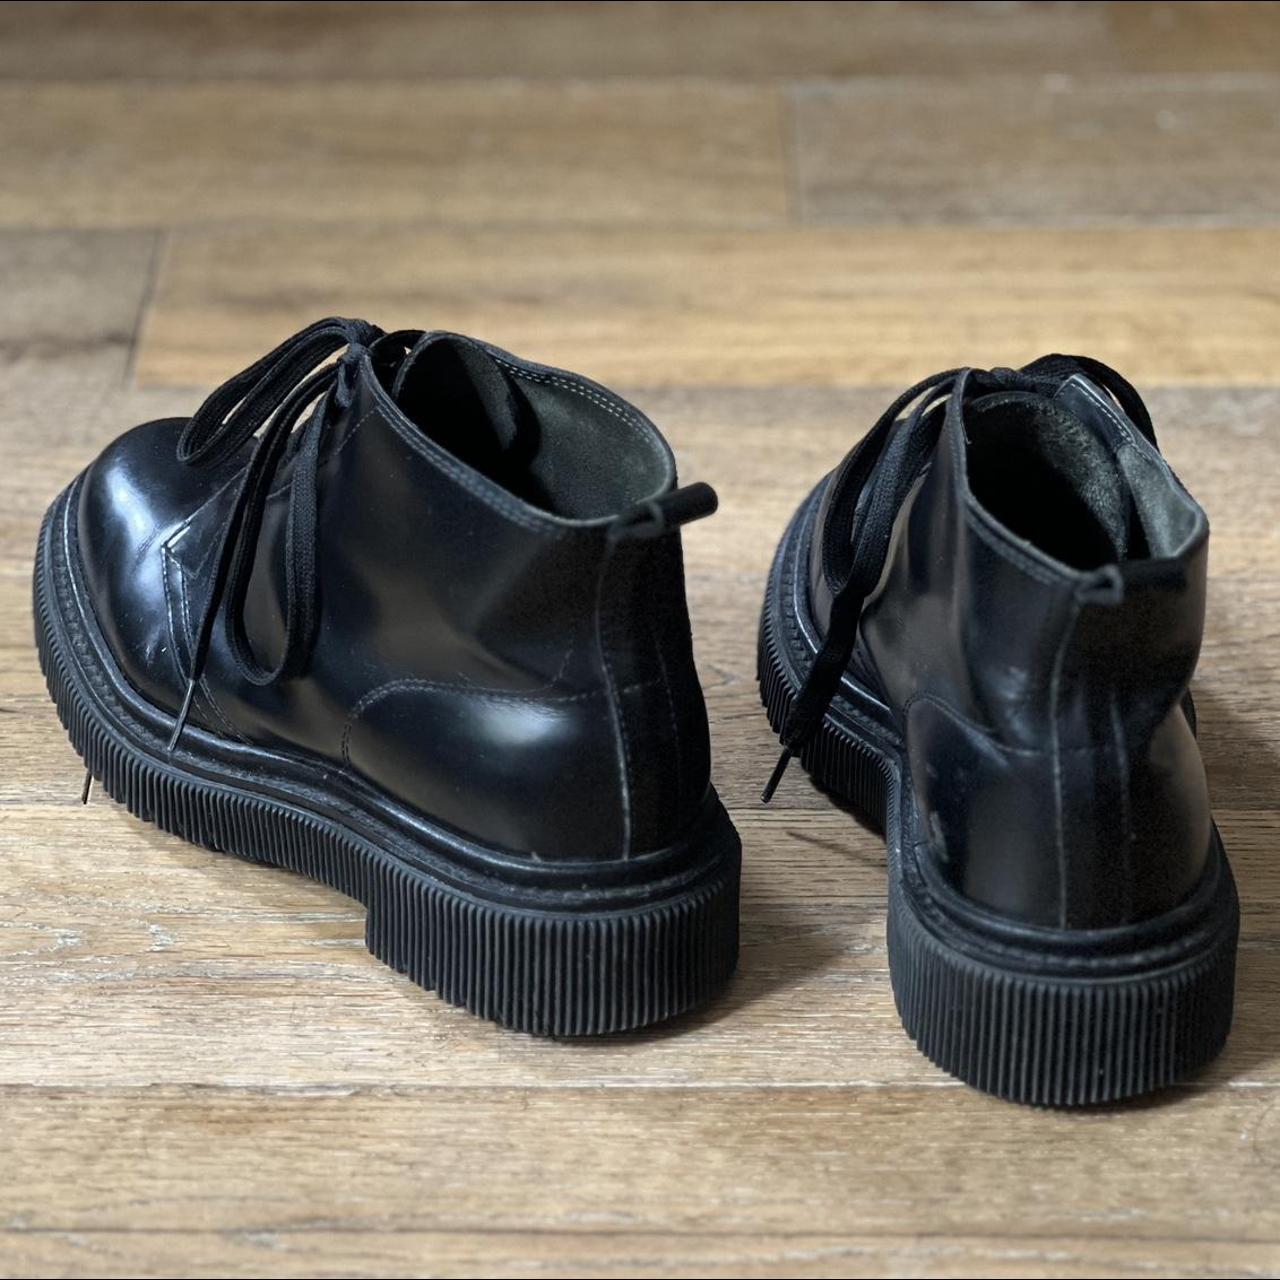 Adieu Women's Black Boots (3)